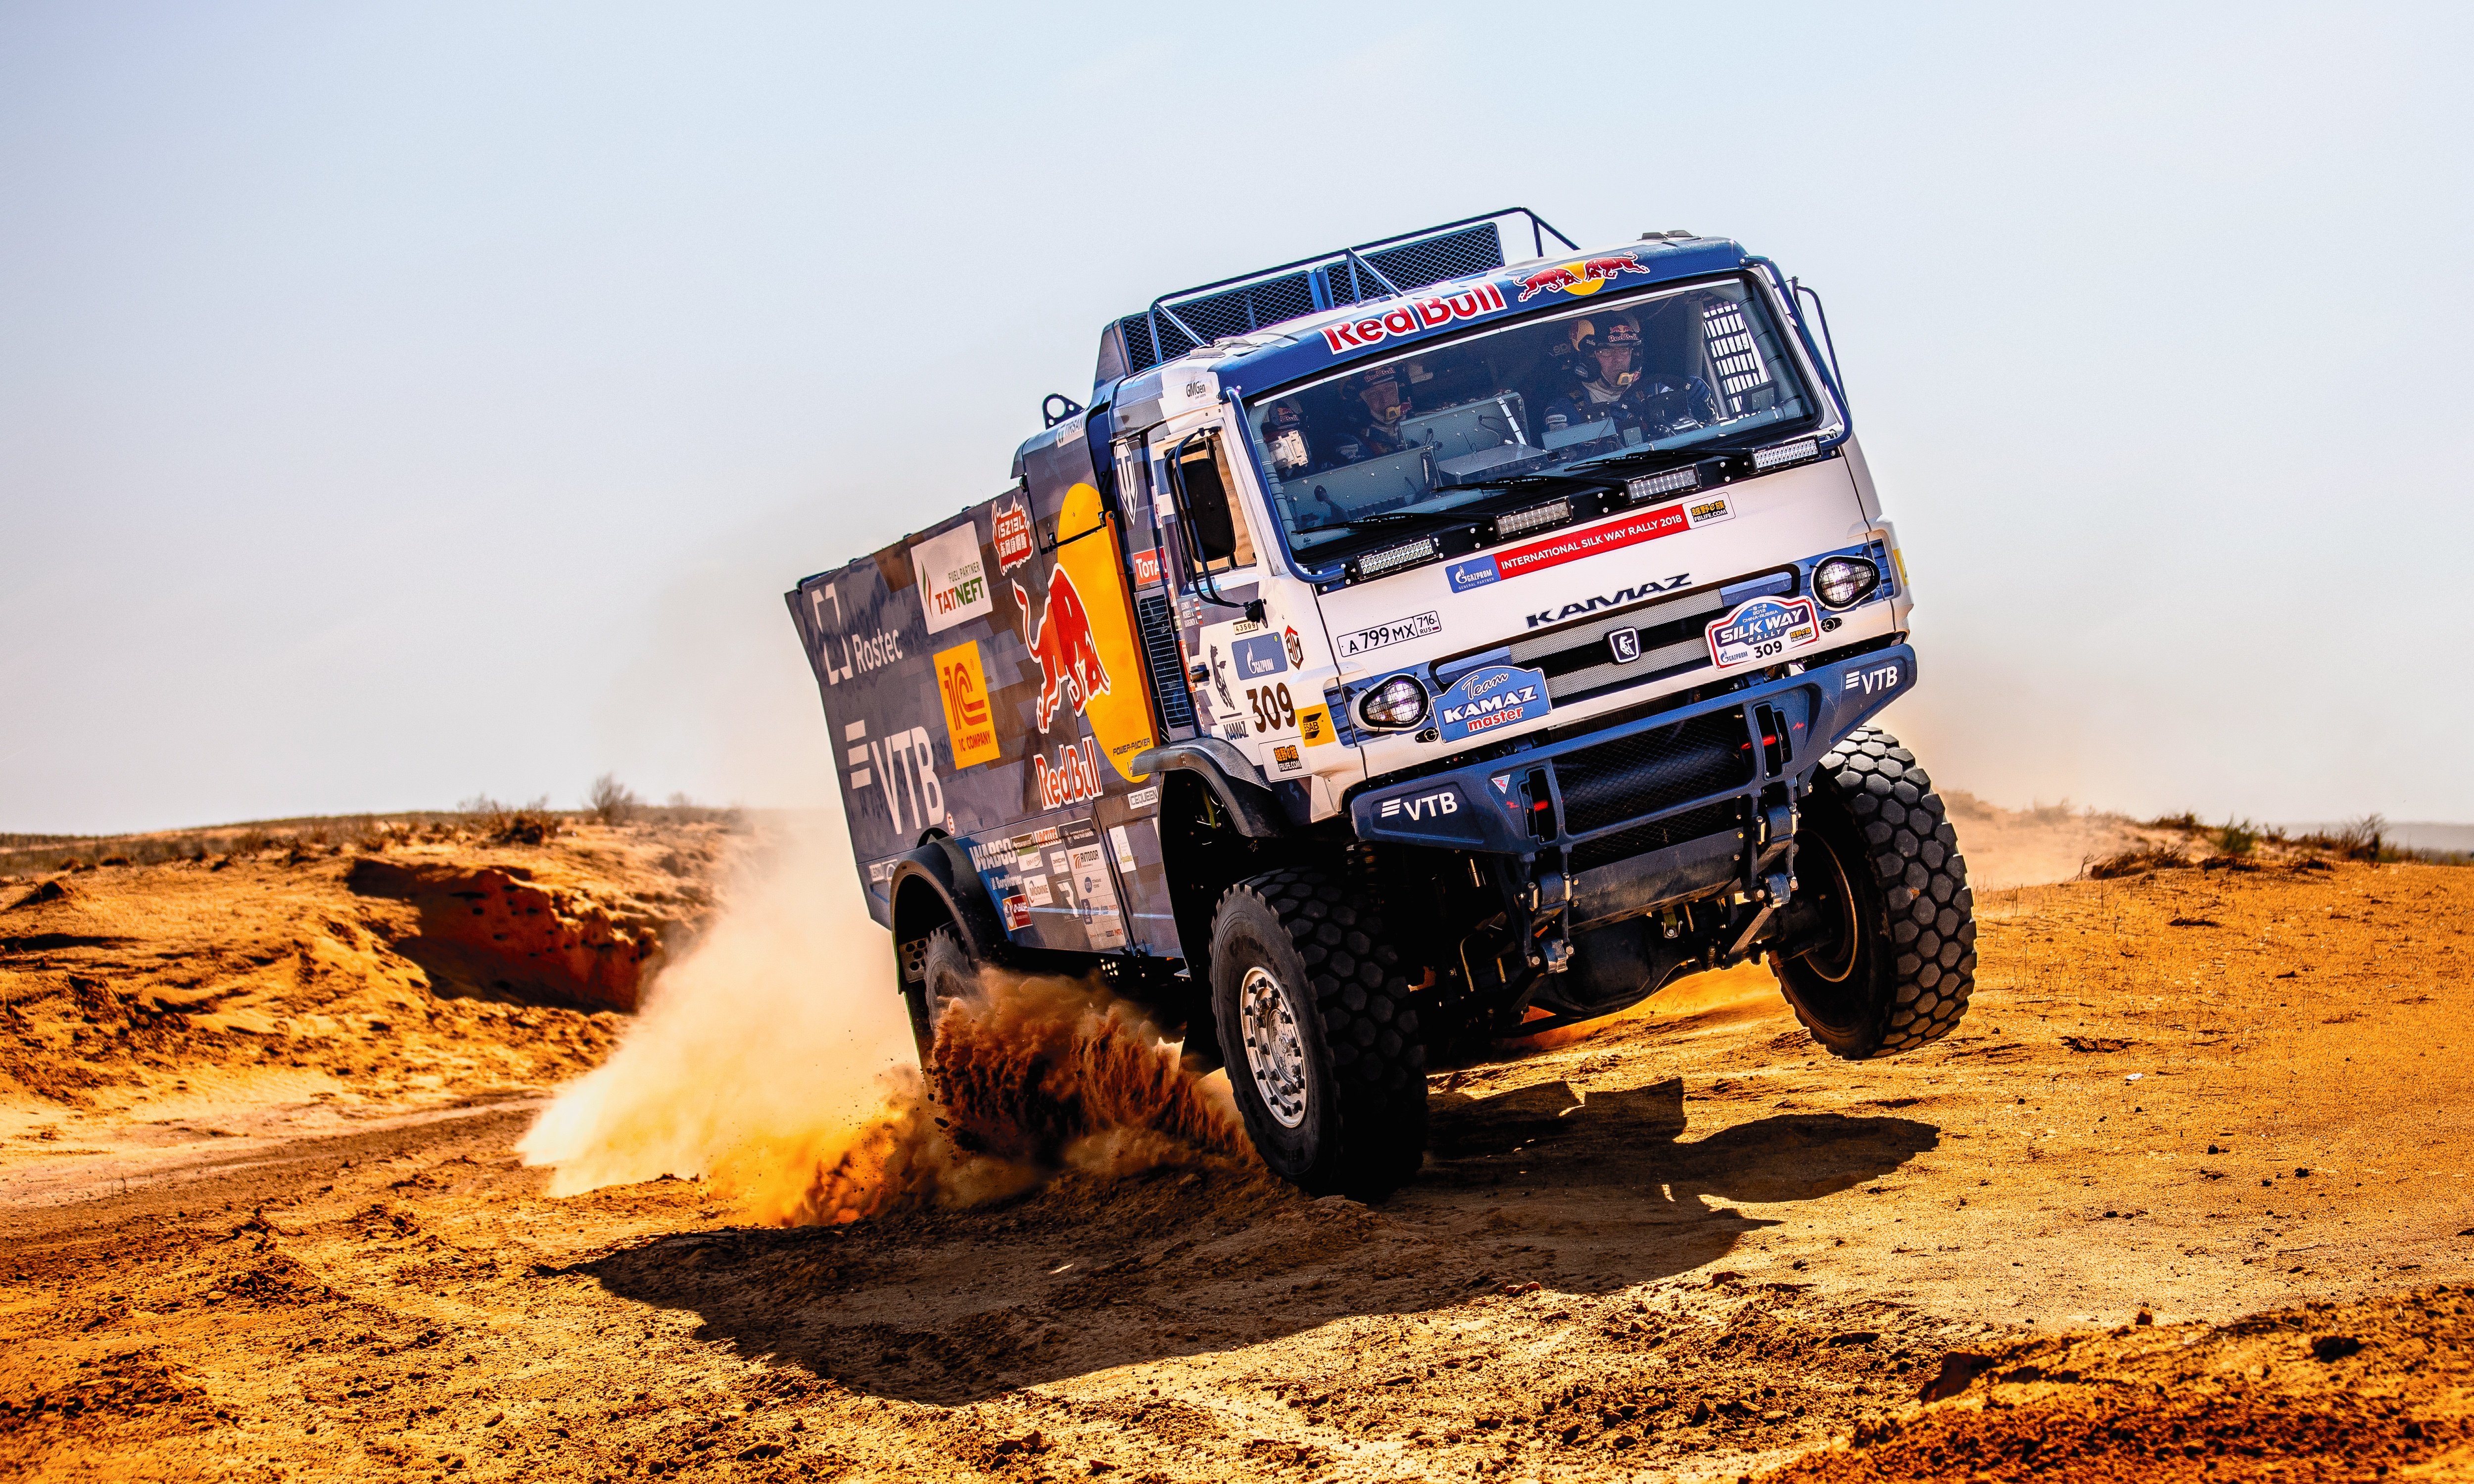 General 5000x3000 Rally truck desert vehicle Kamaz Red Bull Racing outdoors motorsport sport Blue Trucks livery Russian trucks